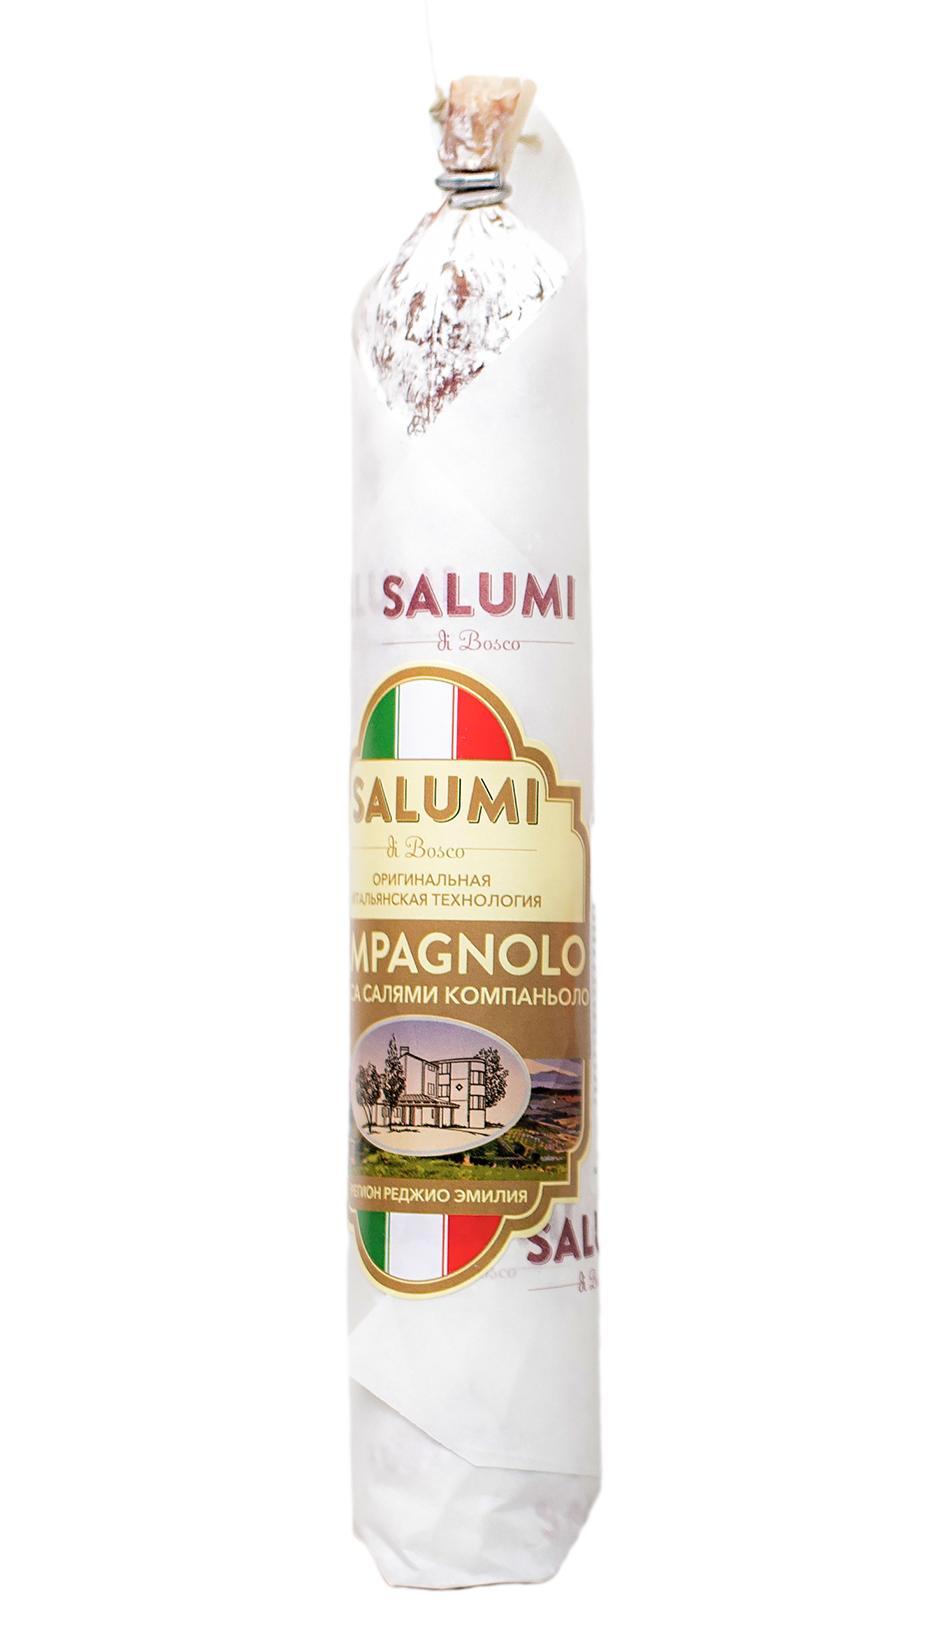 Колбаса сыровяленная полусухая Салями Кампаньоло, Salumi di Bosco, 200 гр., пакет